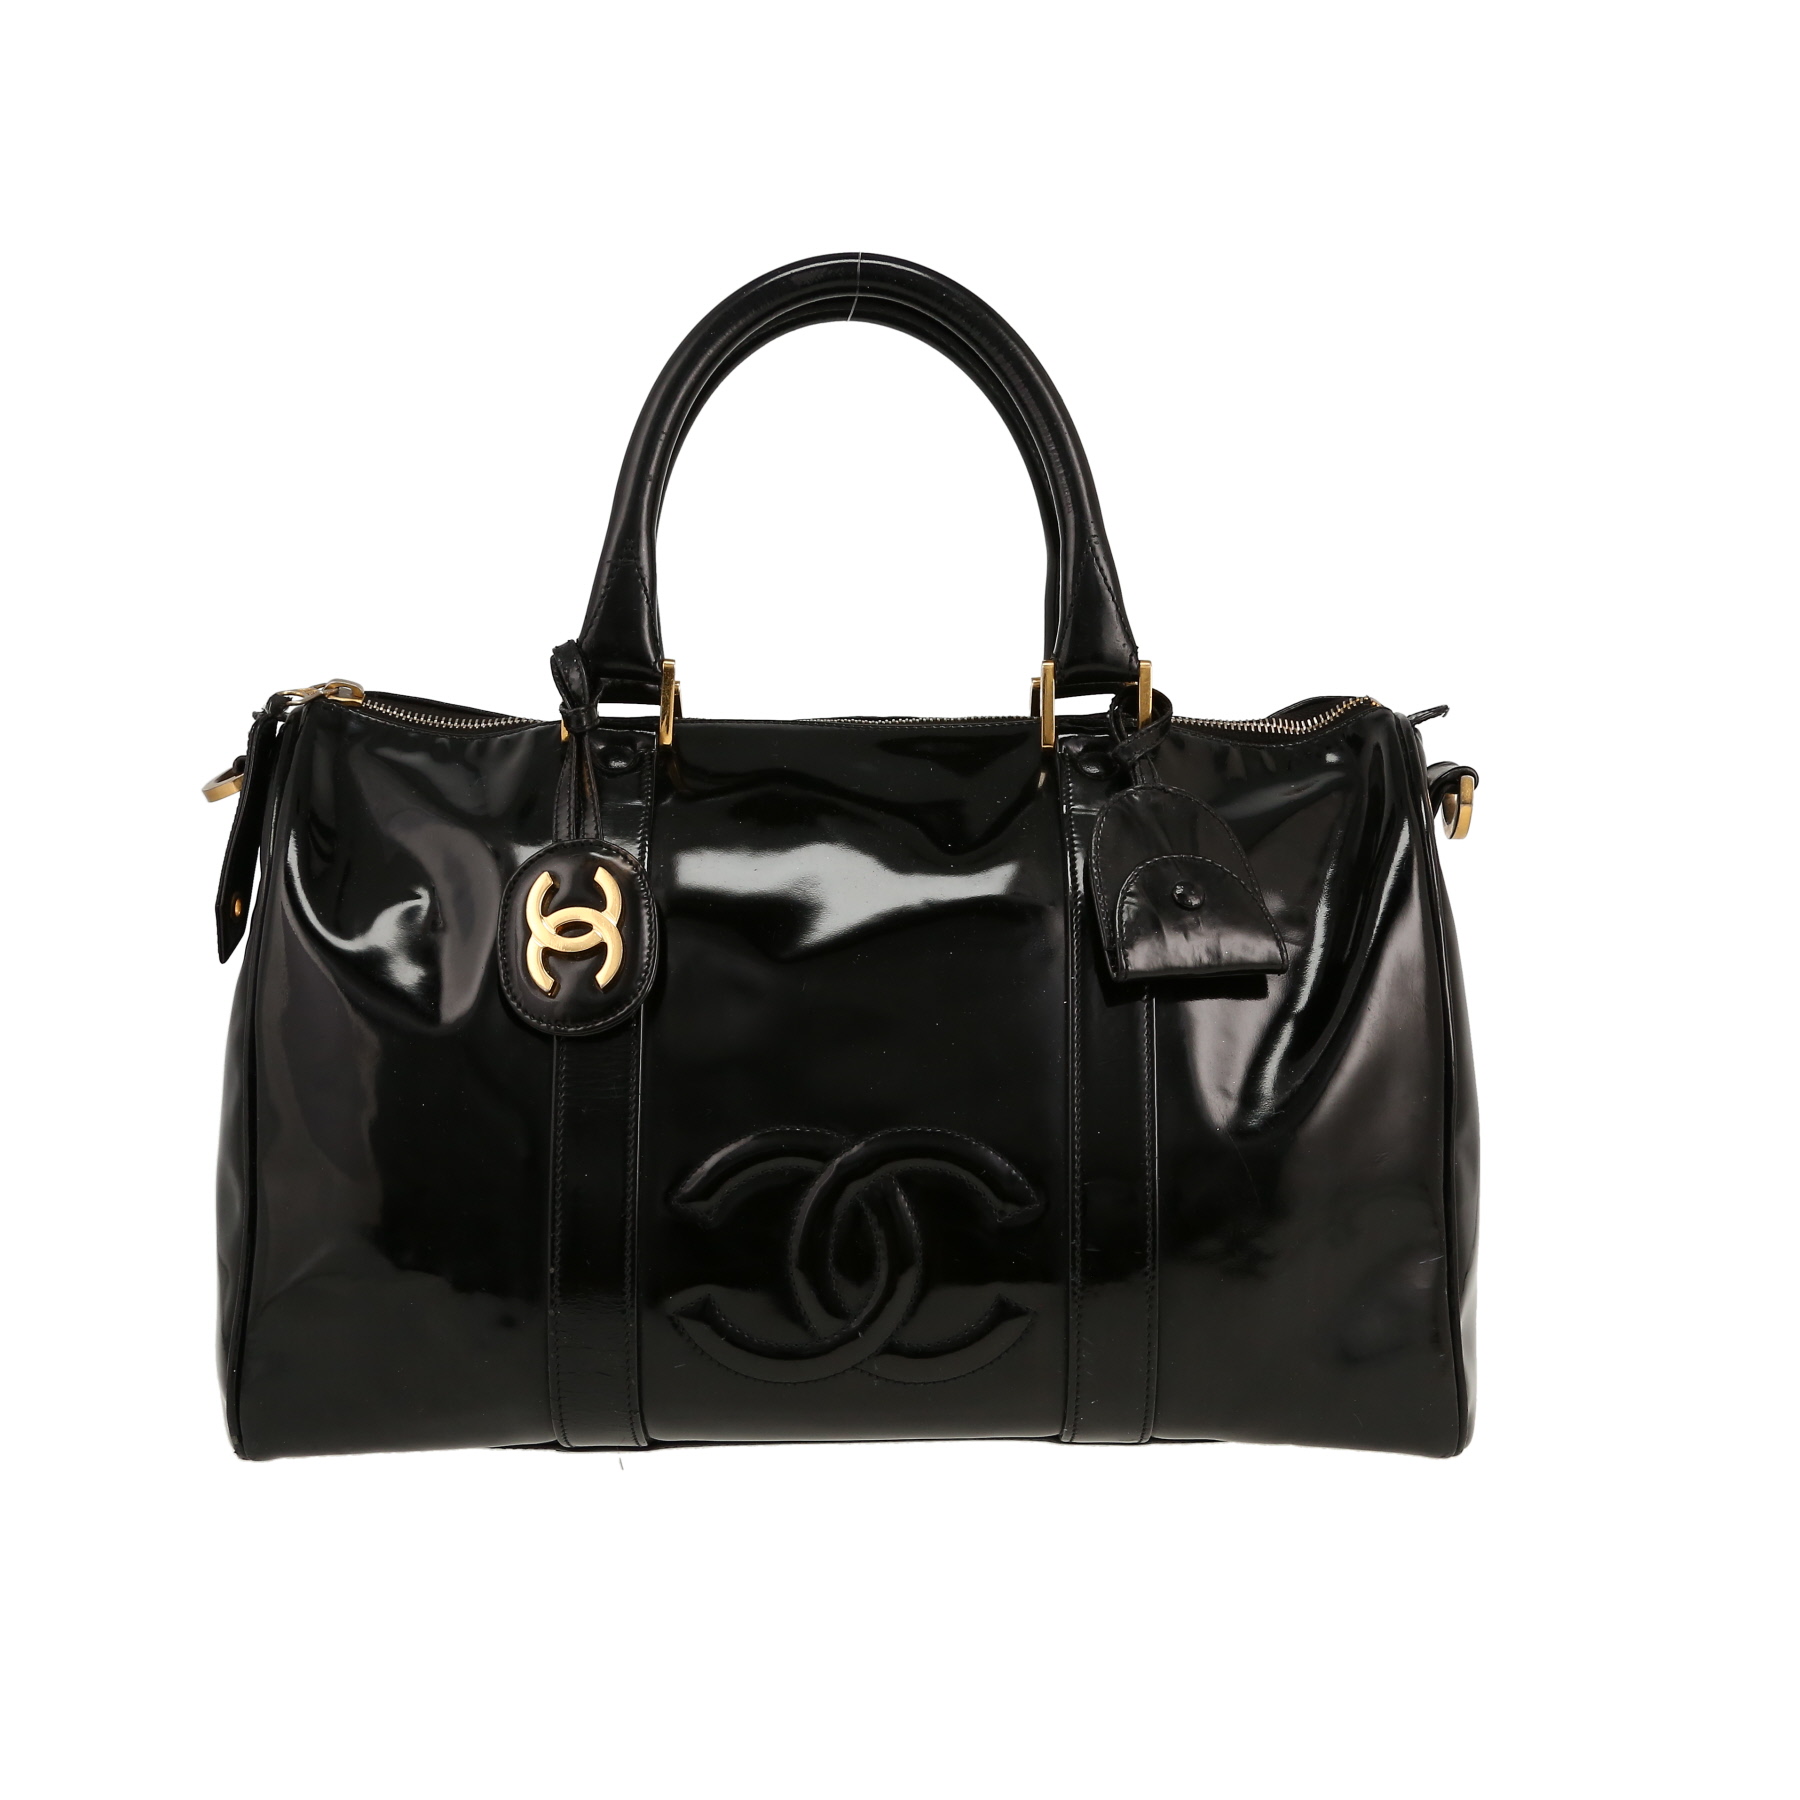 Handbag In Black Patent Leather